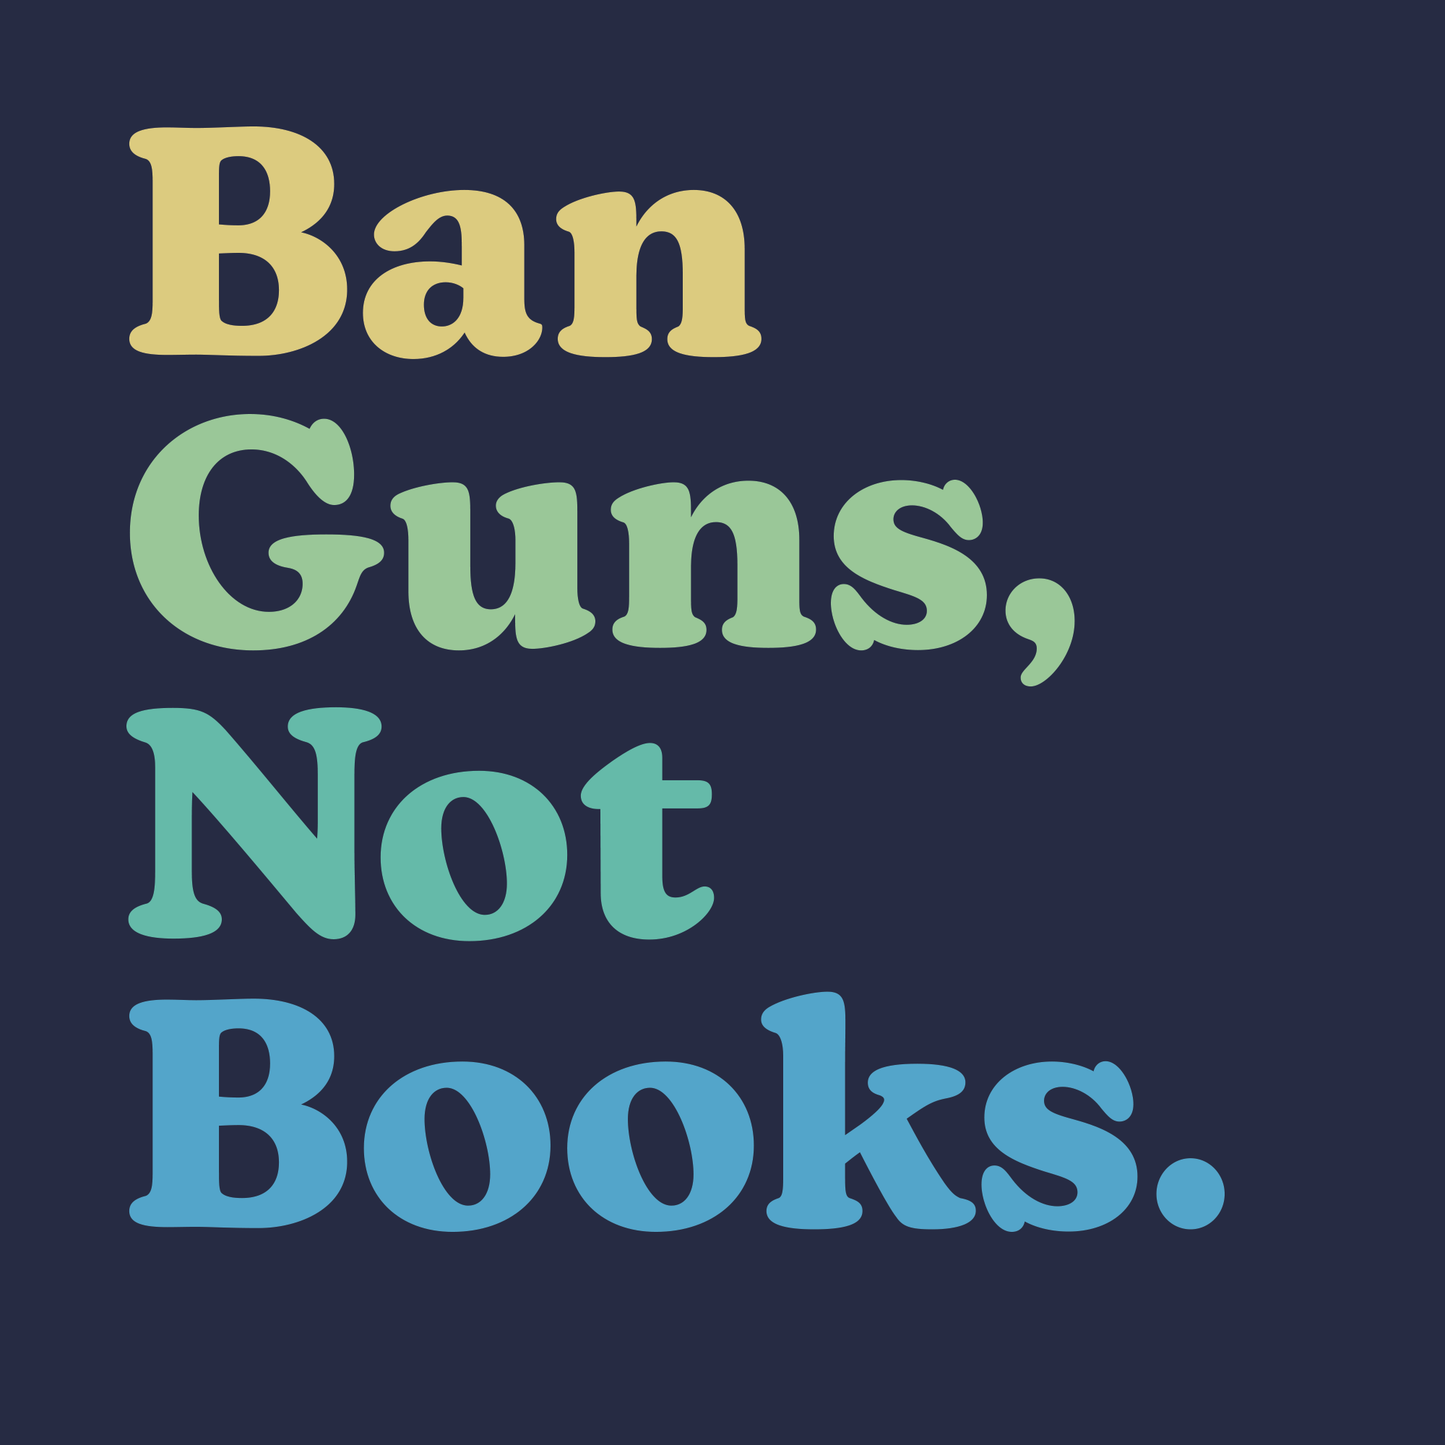 Ban Guns Not Books - Women’s V-Neck Tee